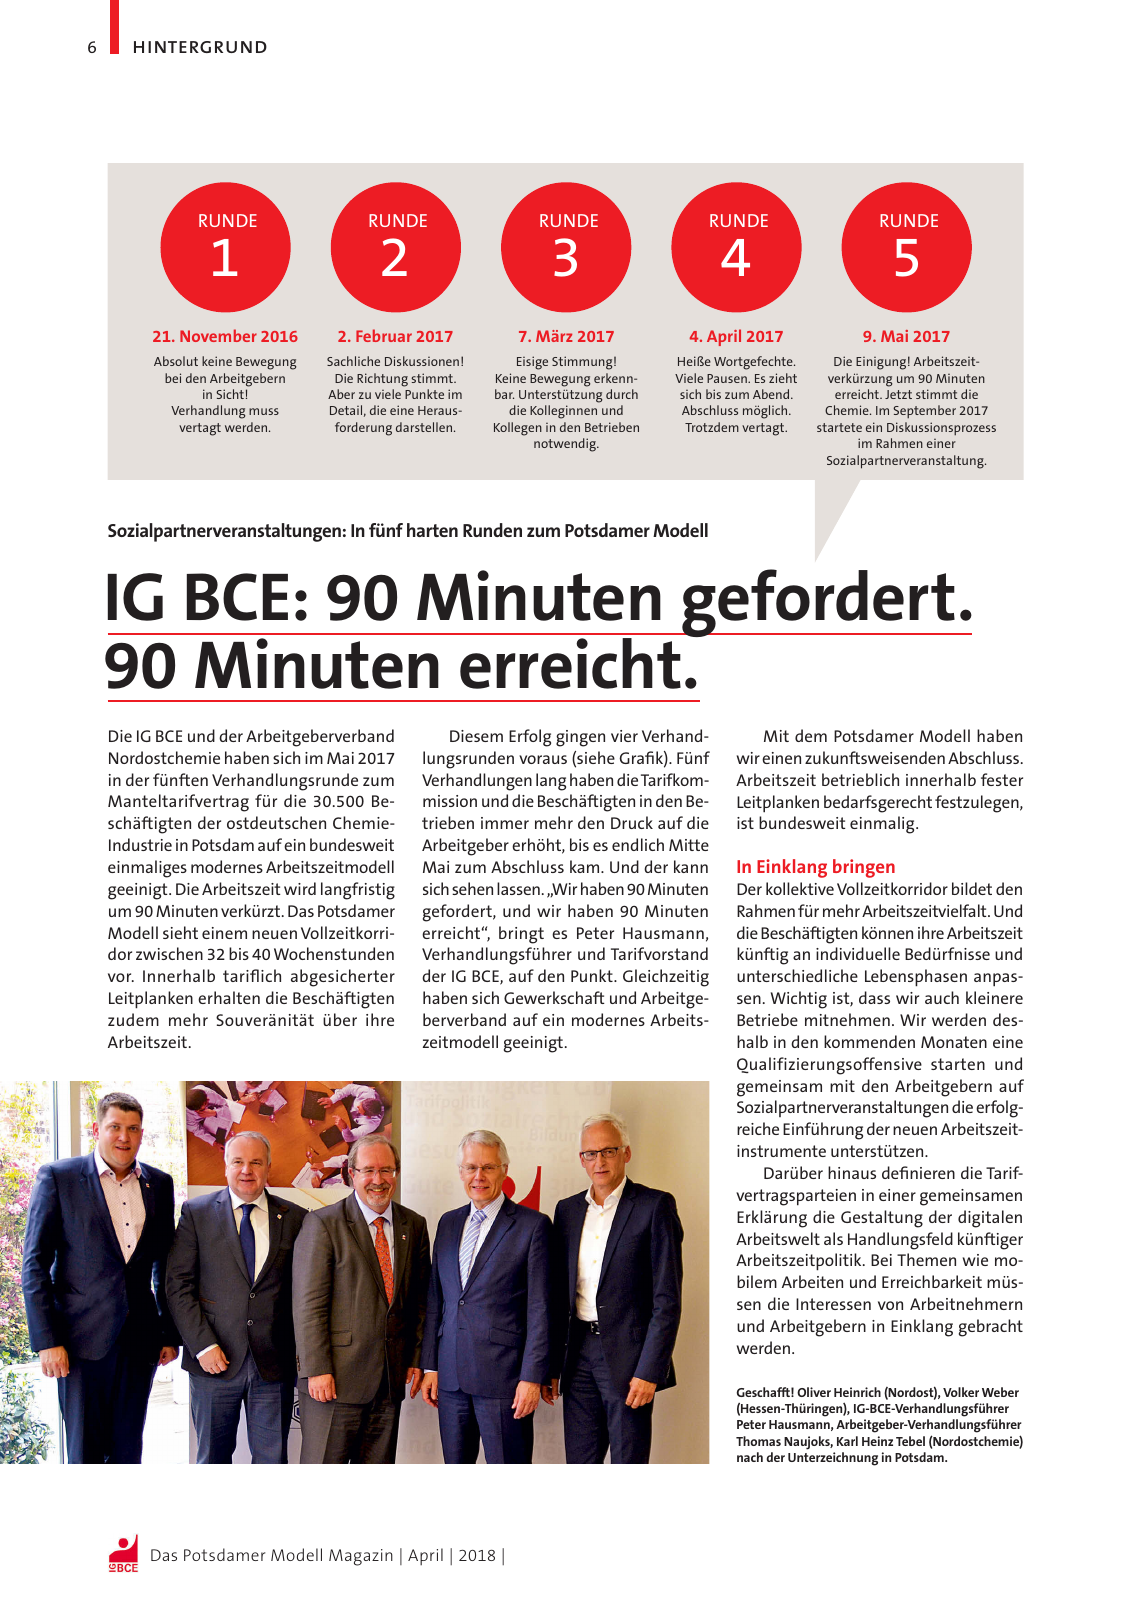 Vorschau IG BCE - Potsdamer Modell - April 2018 Seite 6